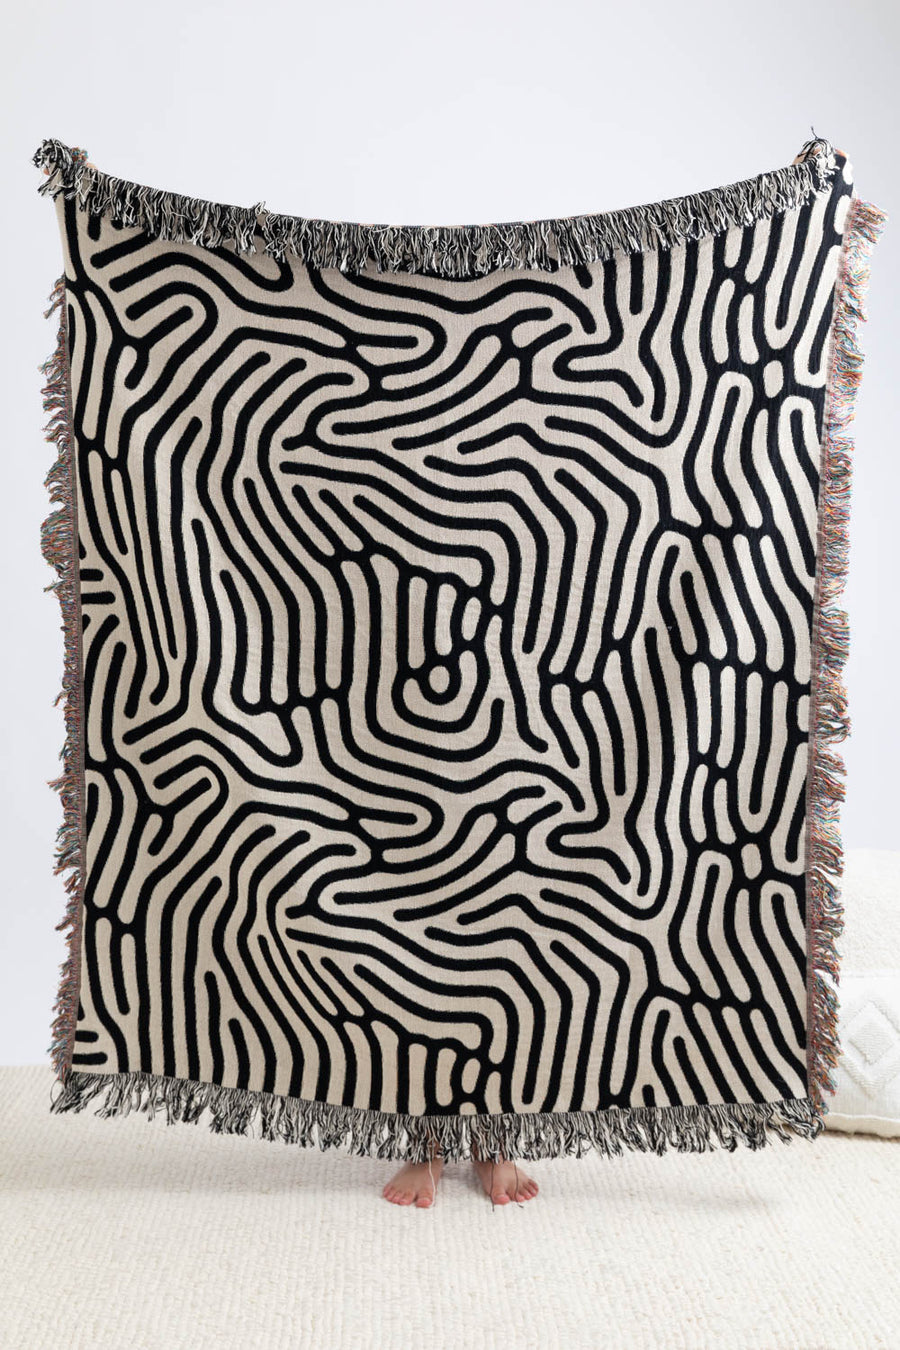 Abstract Modern Art Throw Blanket 50x60